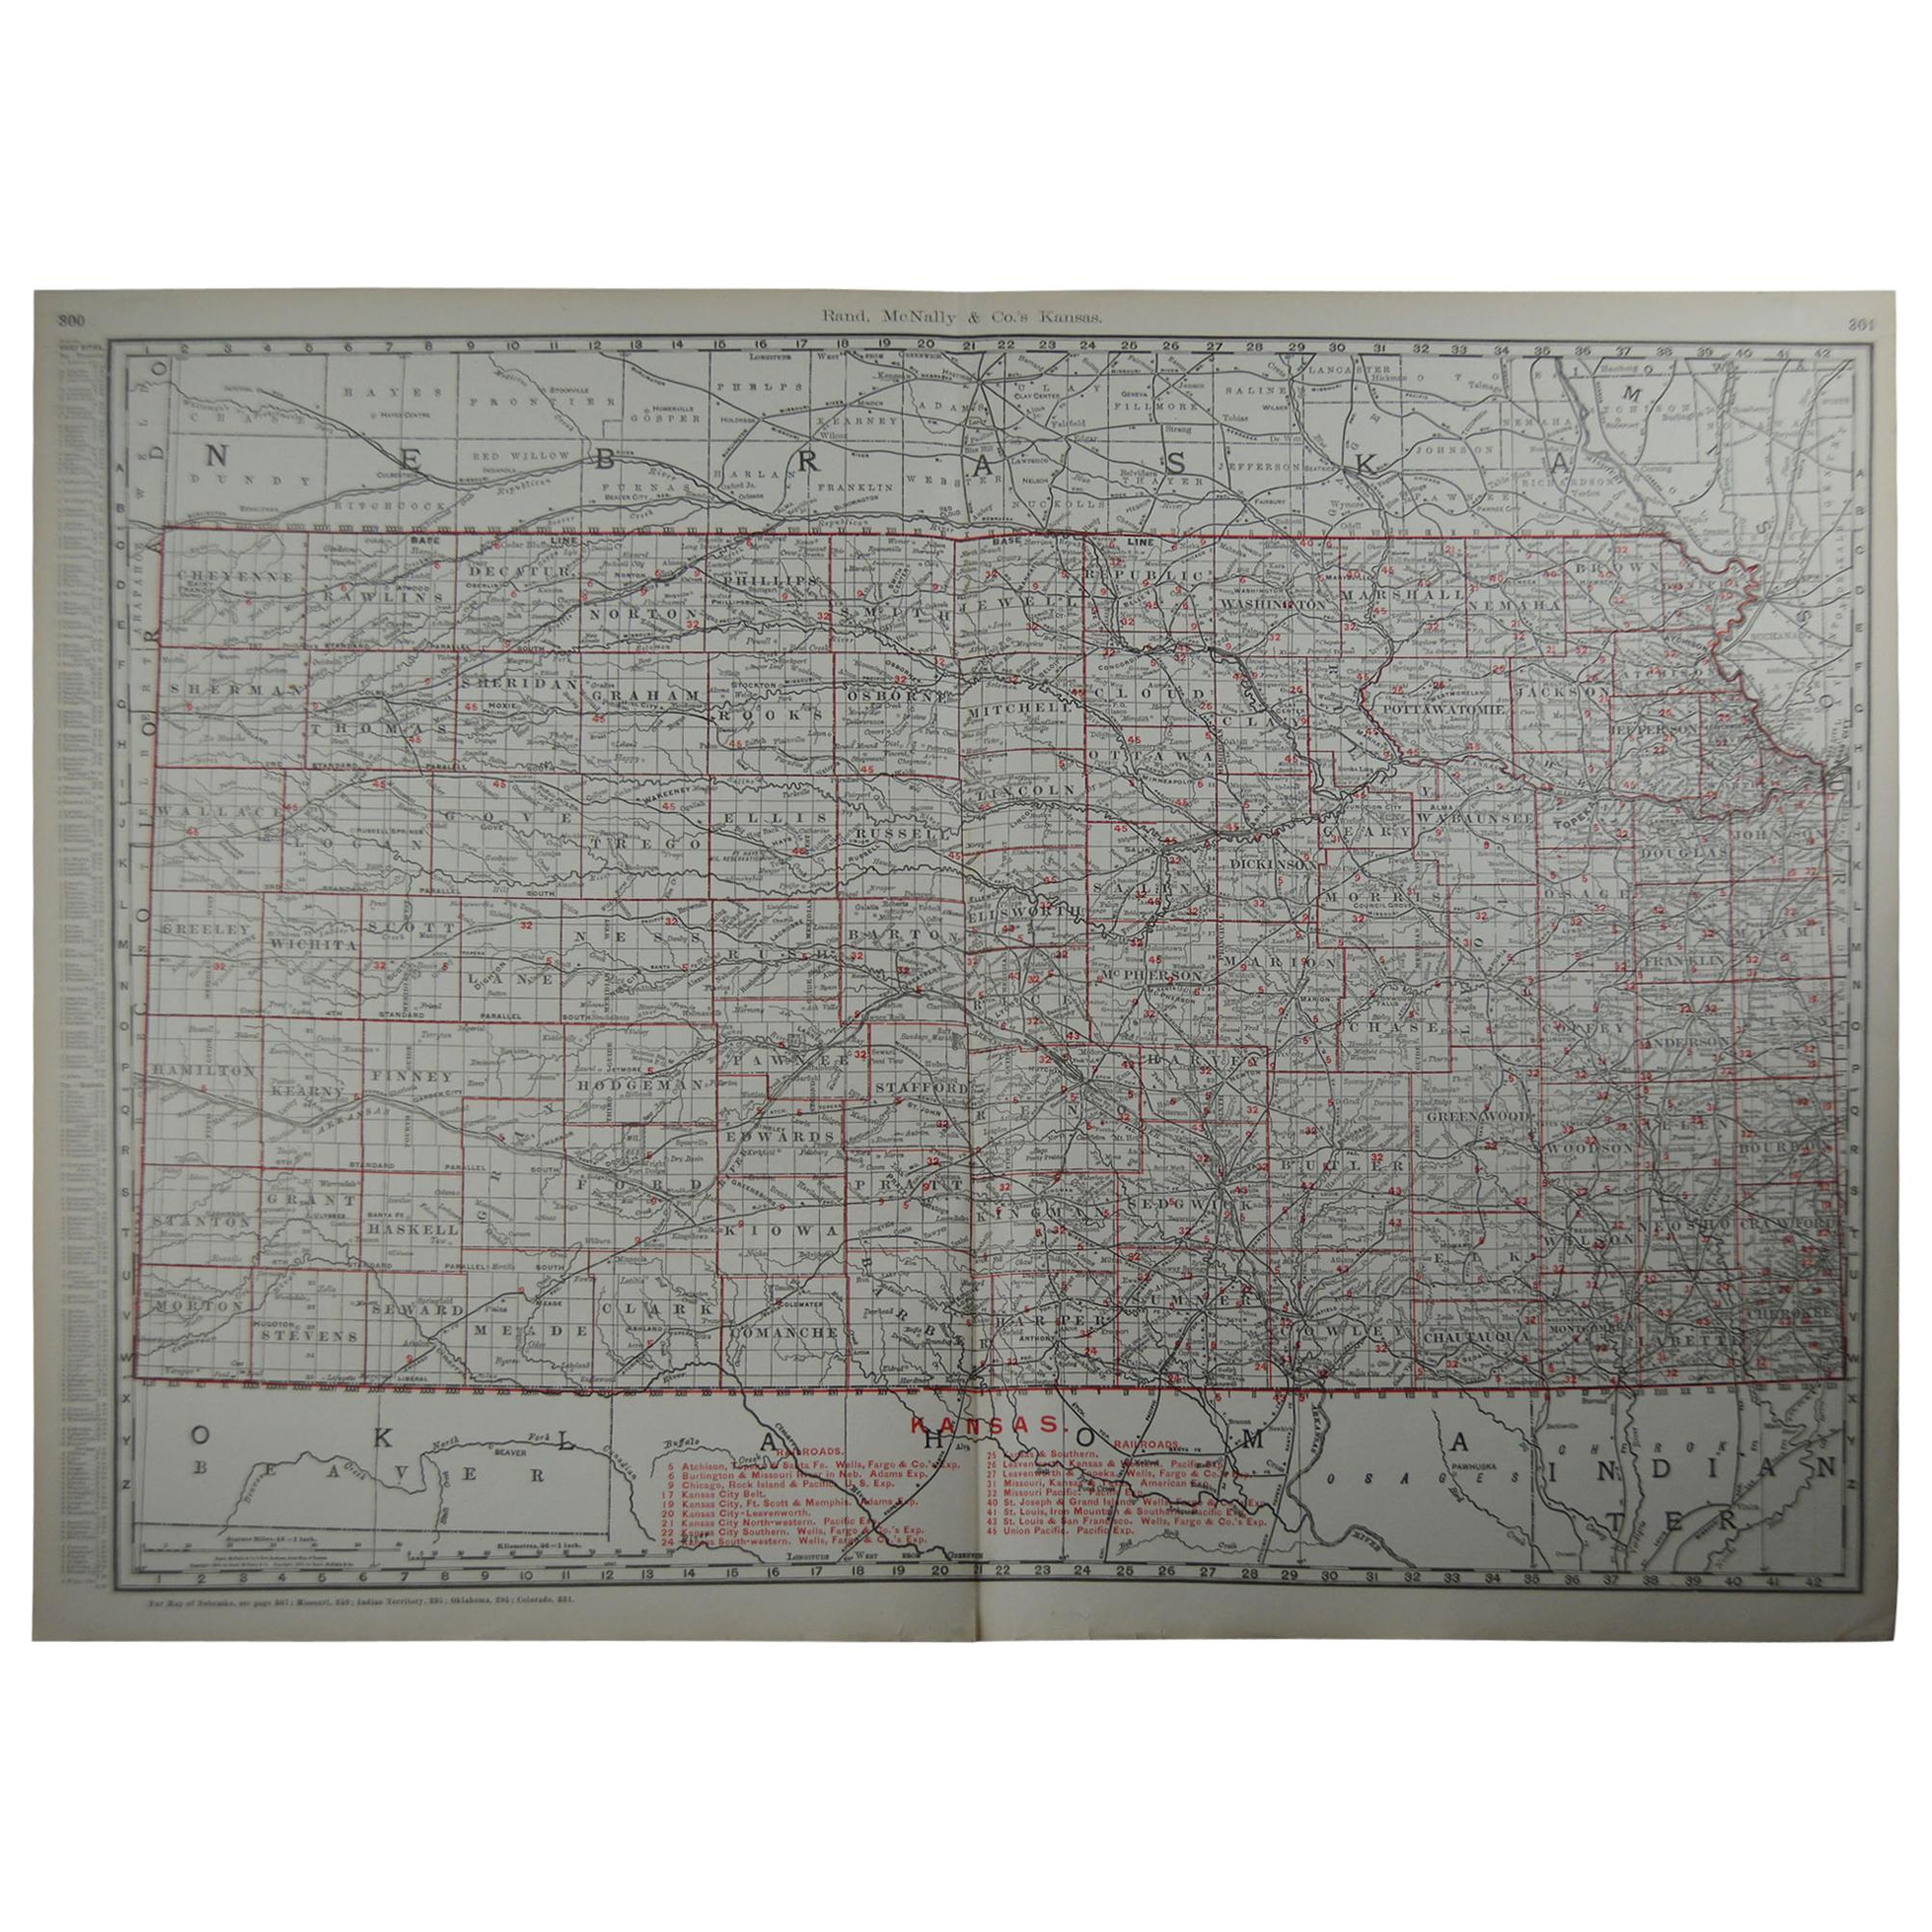 12 Original Antique Maps of American States by Rand McNally, circa 1900